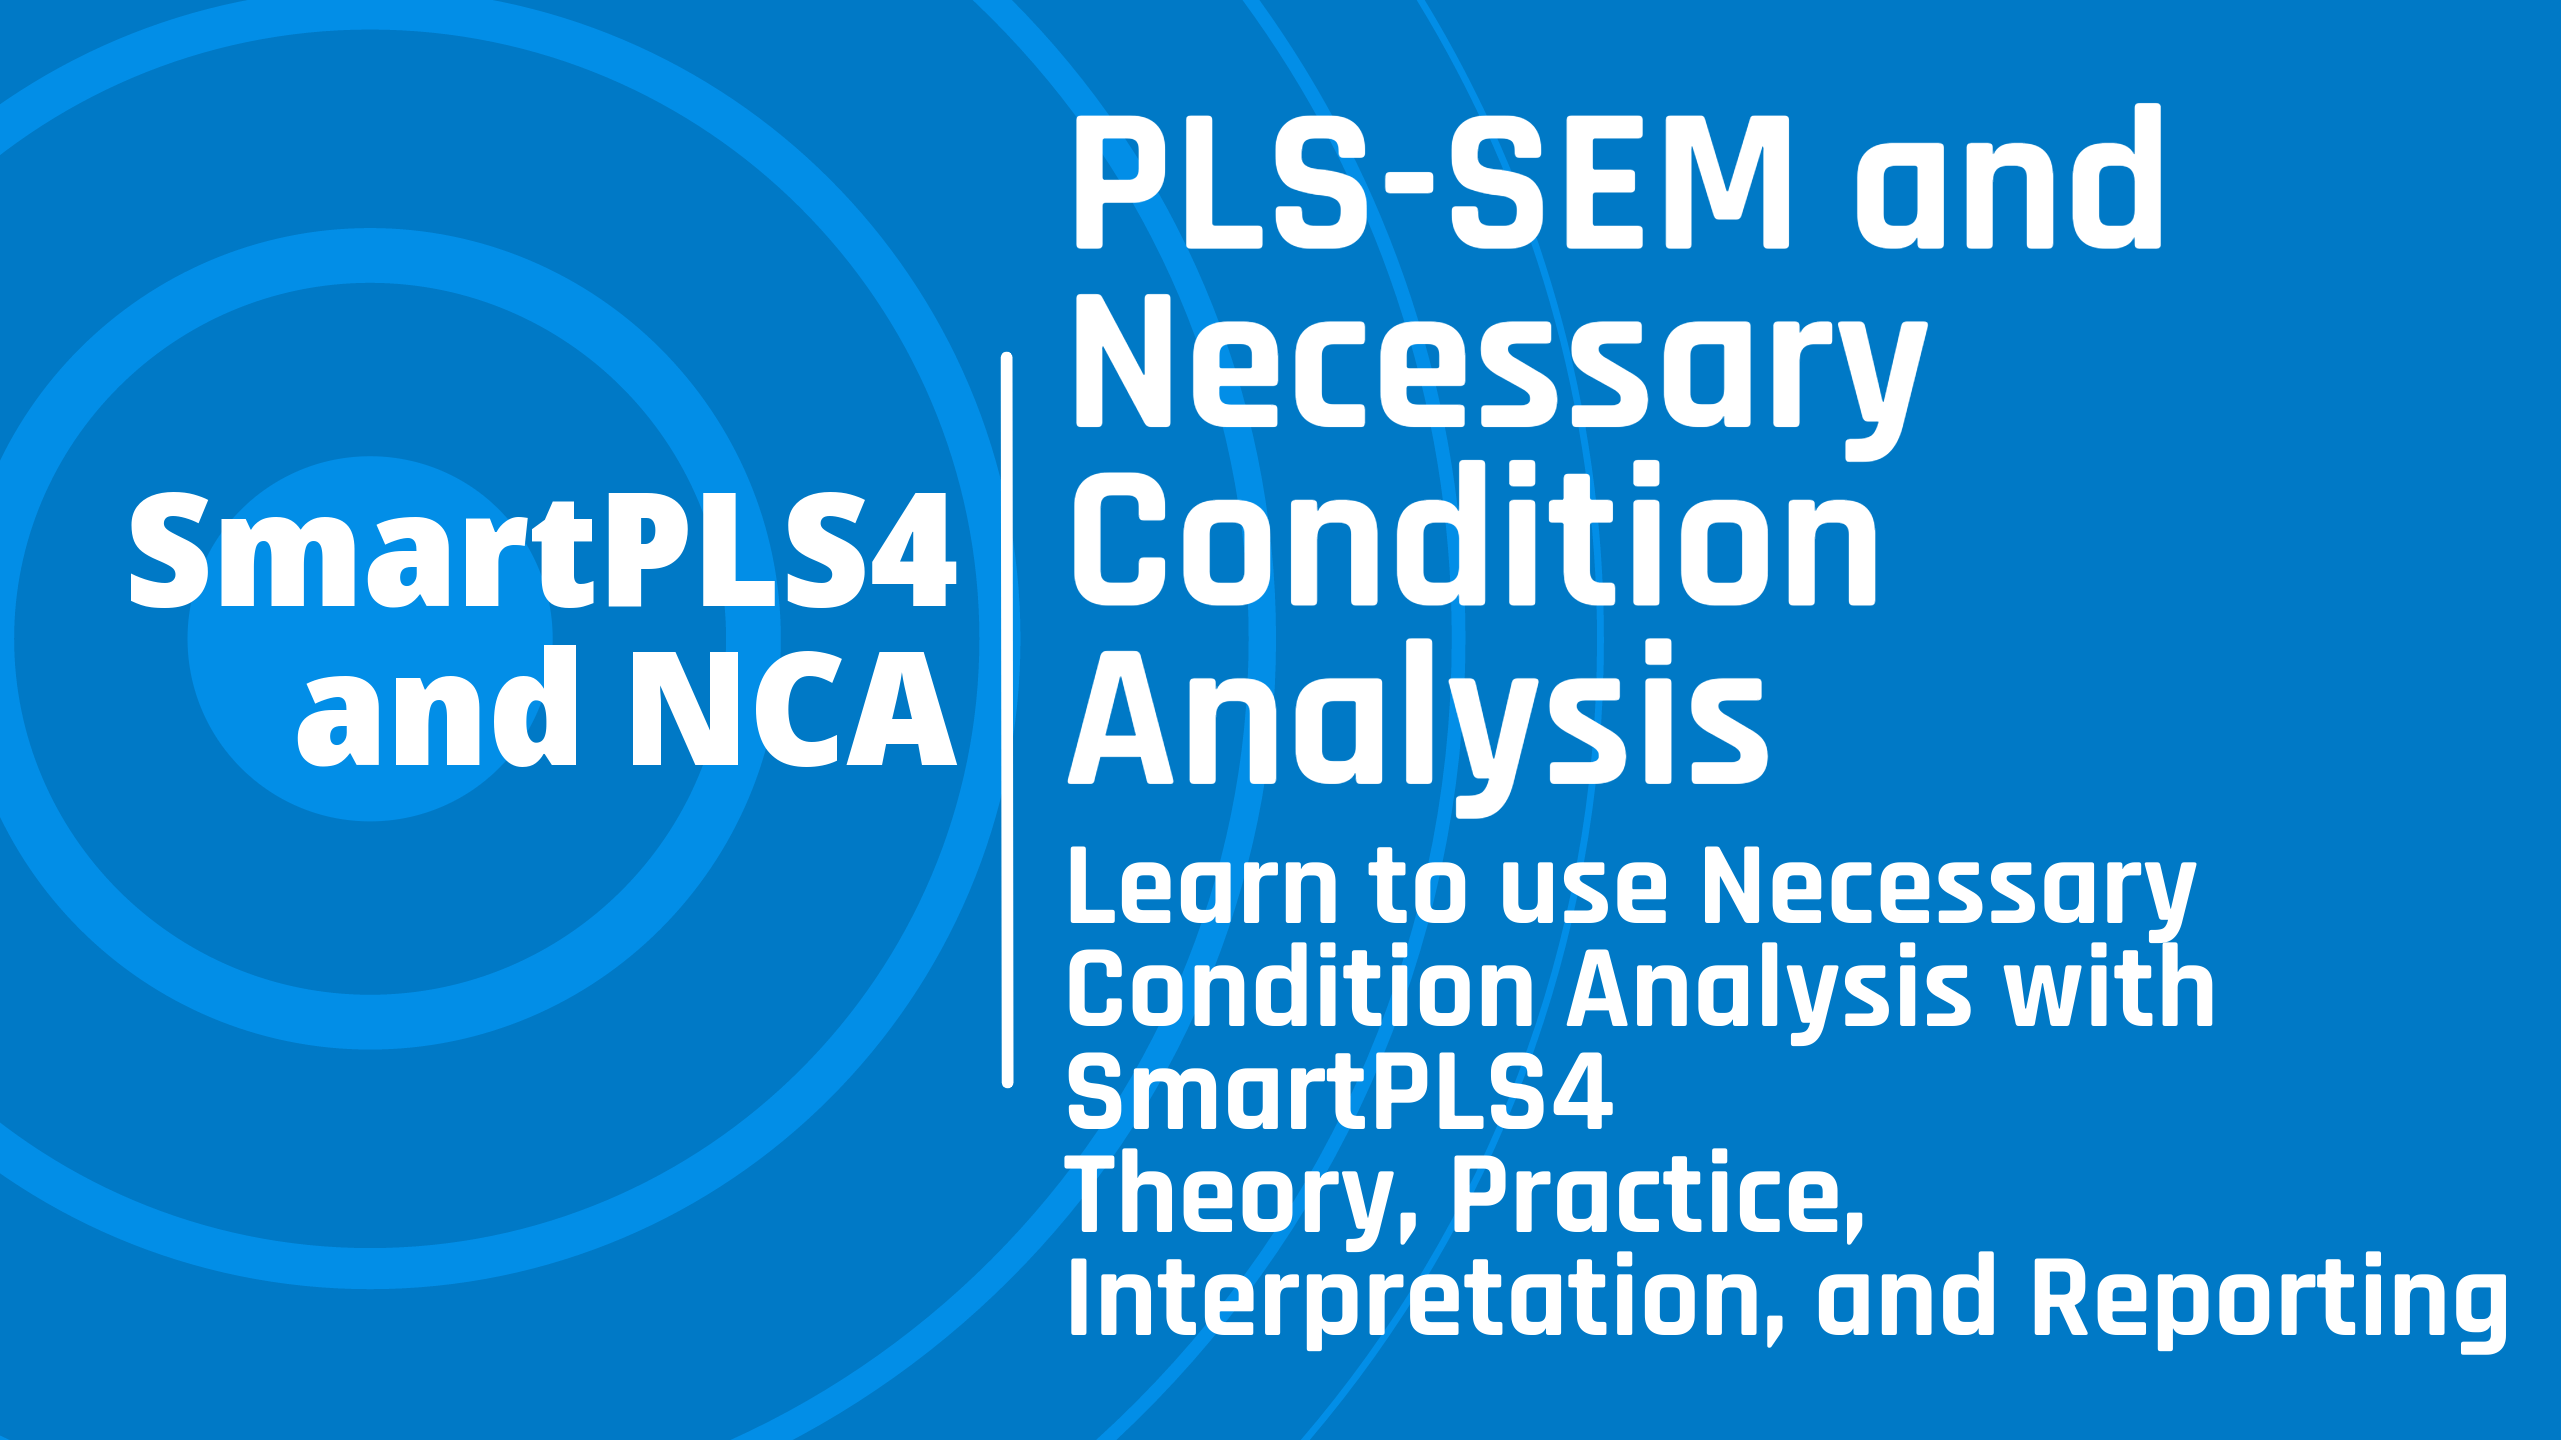 SmartPLS4 and Necessary Condition Analysis using SmartPLS4